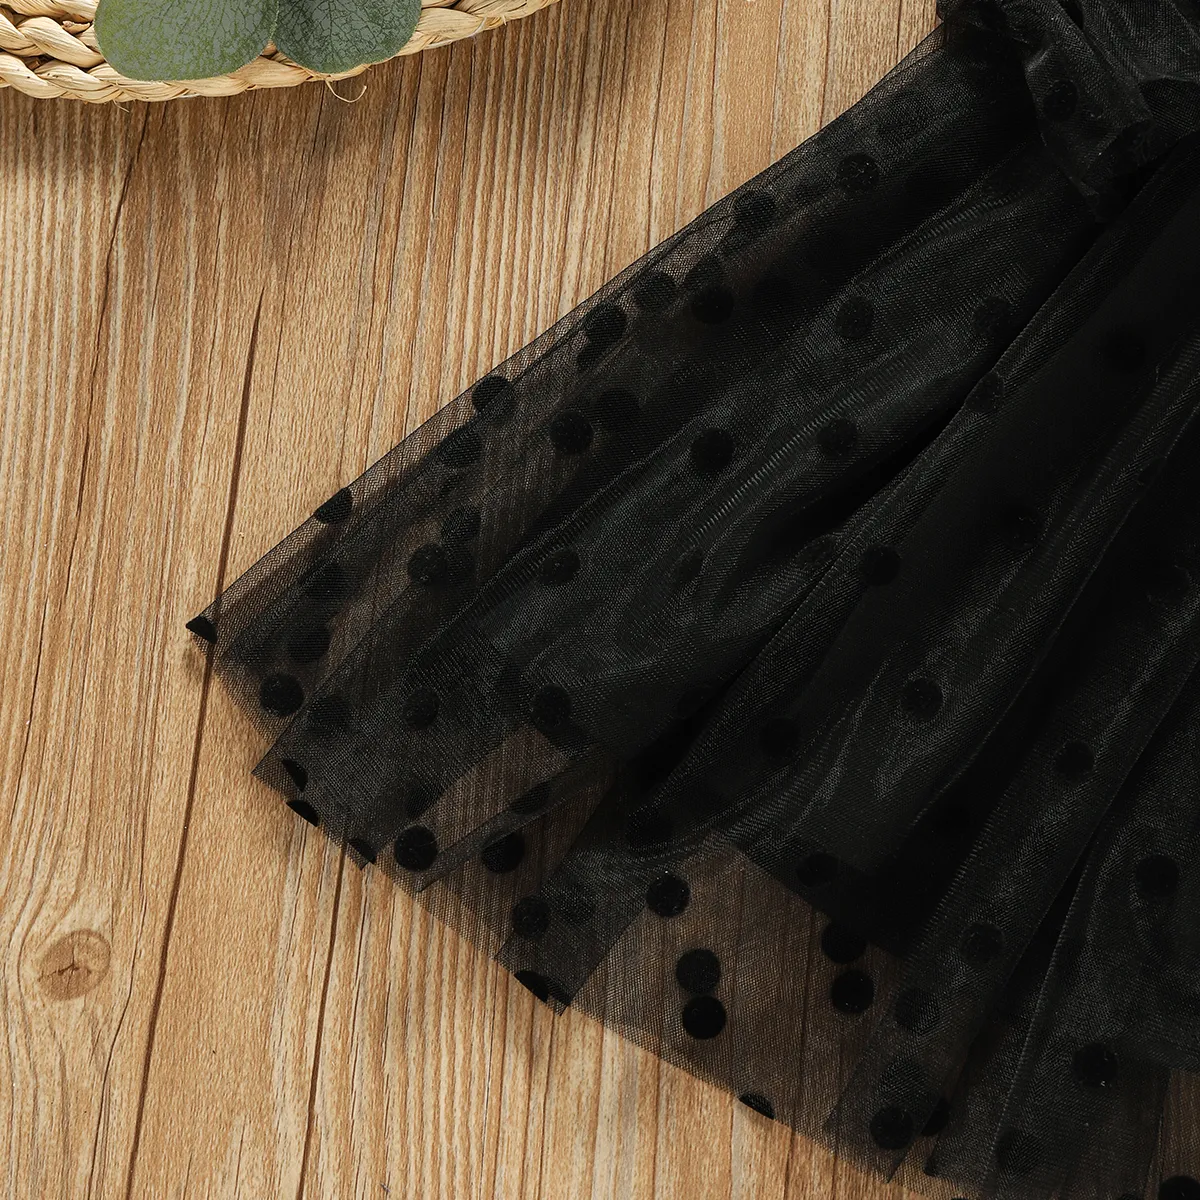 Baby Black Polka Dots Layered Ruffle Mesh Long-sleeve Tutu Dress Black big image 1